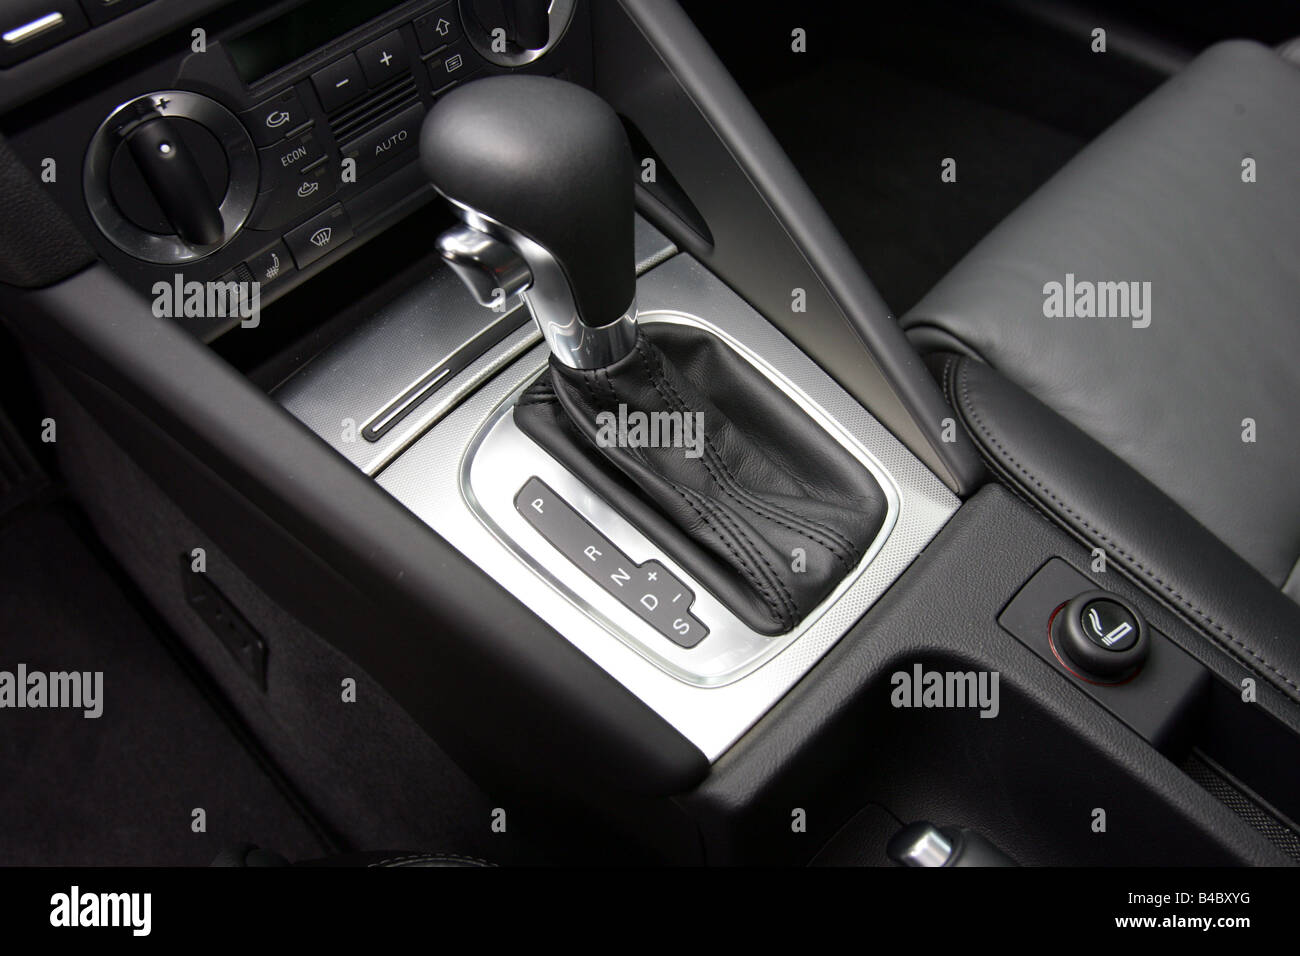 Audi A3 Interior Stockfotos Audi A3 Interior Bilder Alamy